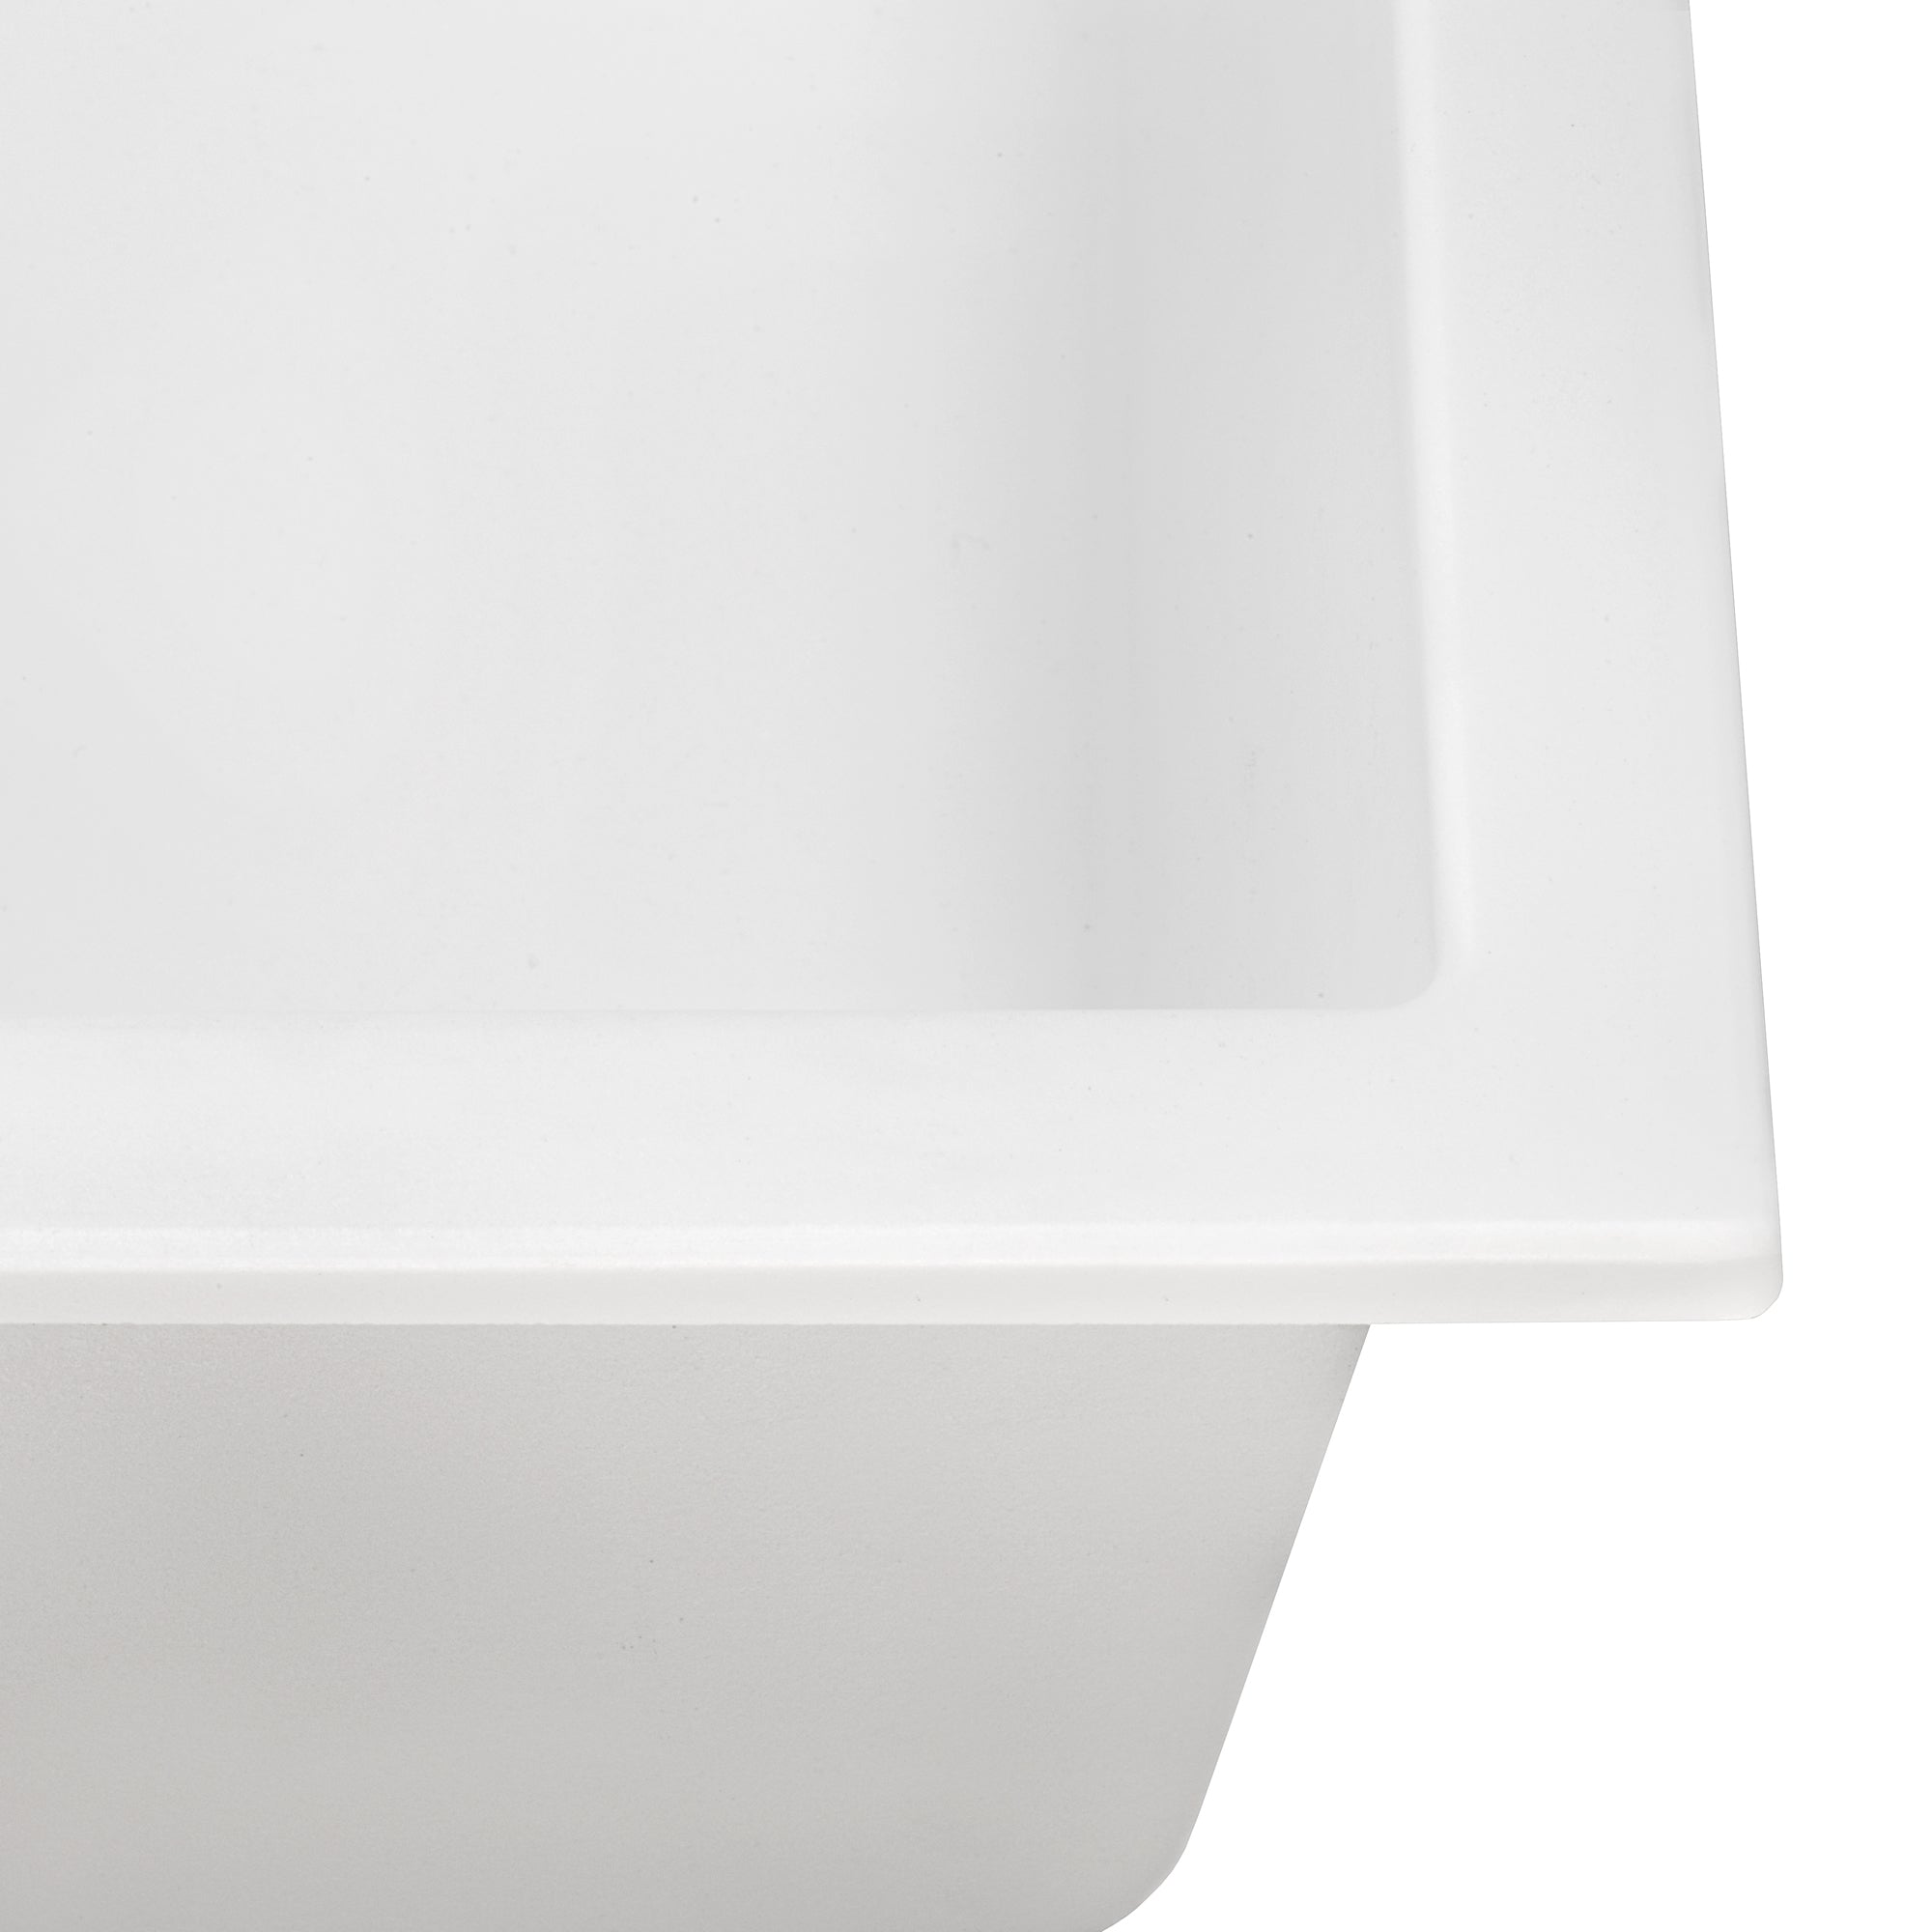 Ruvati 34 x 20" epiGranite Dual-Mount Granite Composite Double Bowl Kitchen Sink